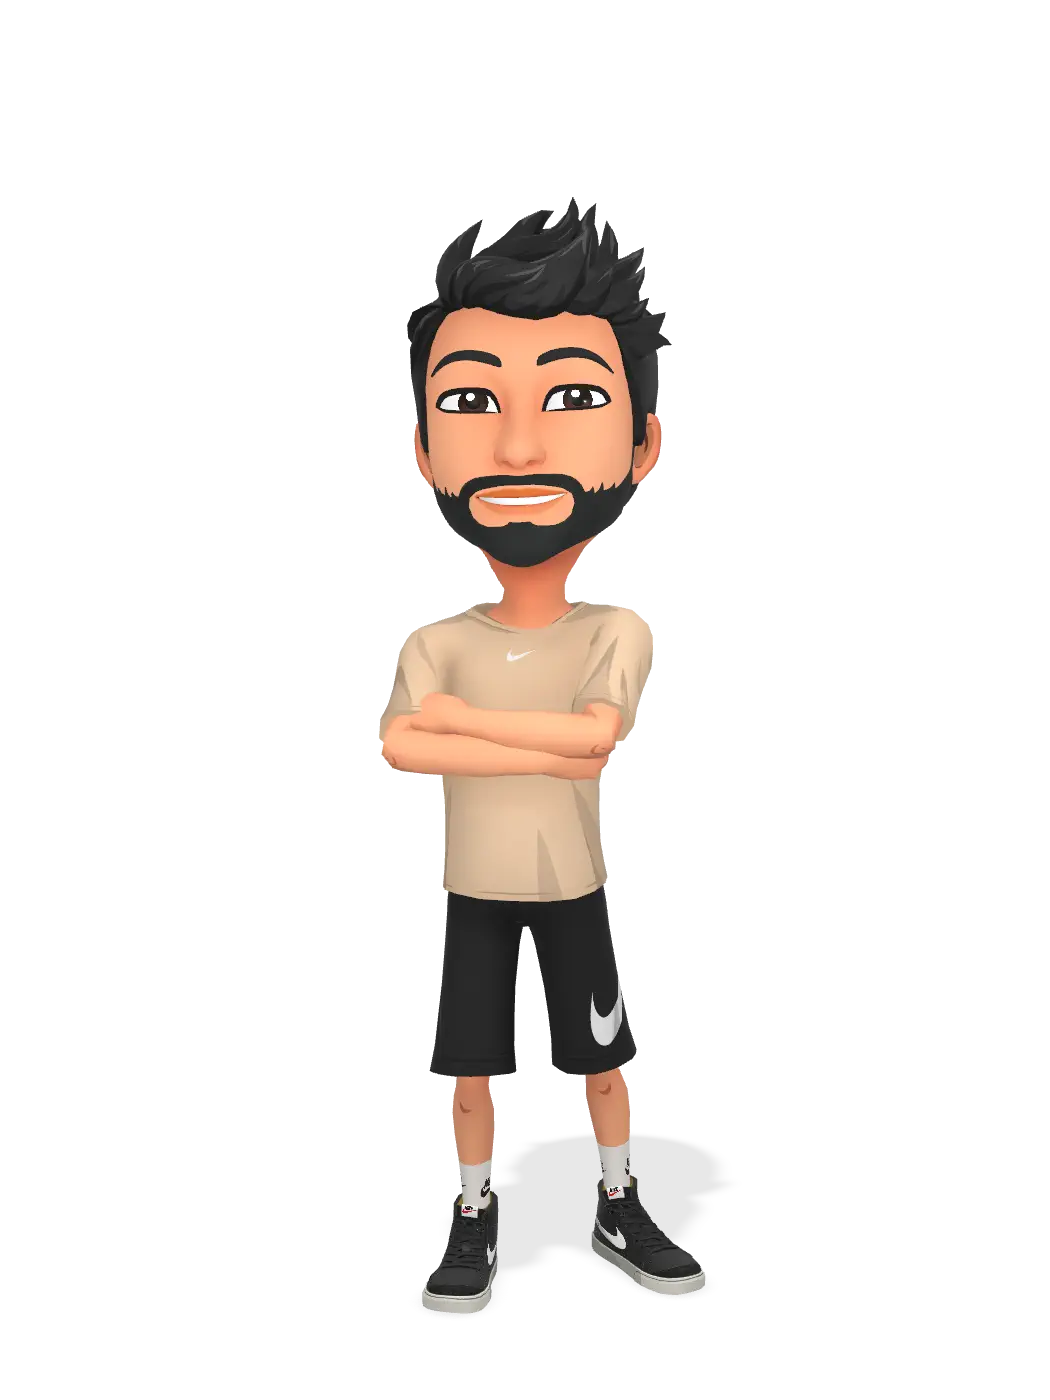 3D Bitmoji for mdh094 avatar